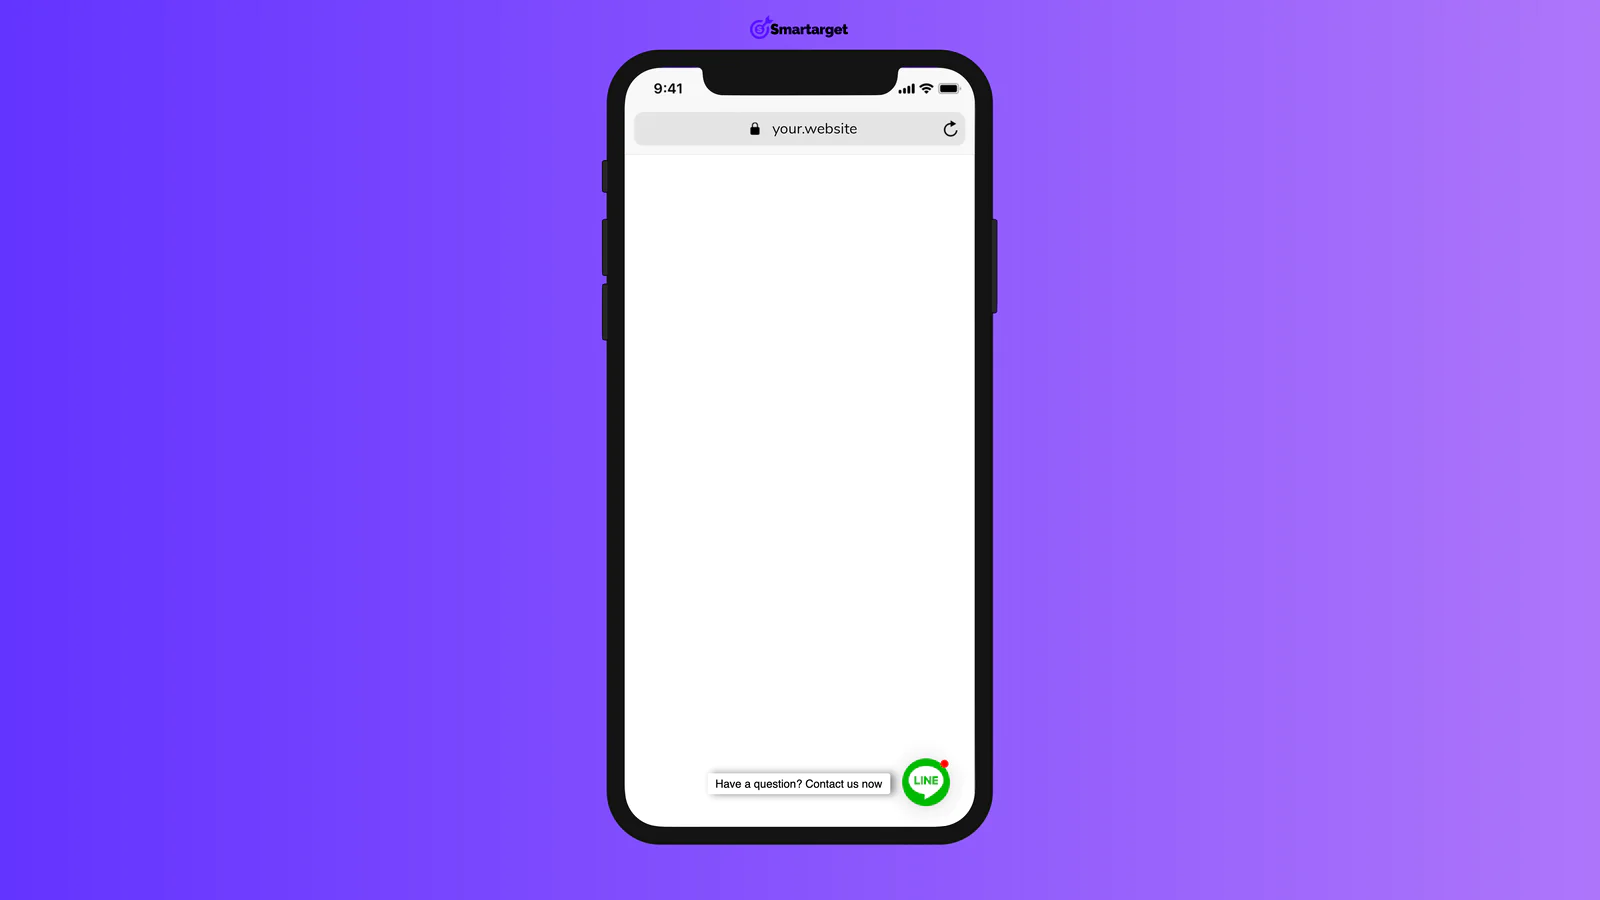 Line Chat - Contacte-nos for Shopiroller